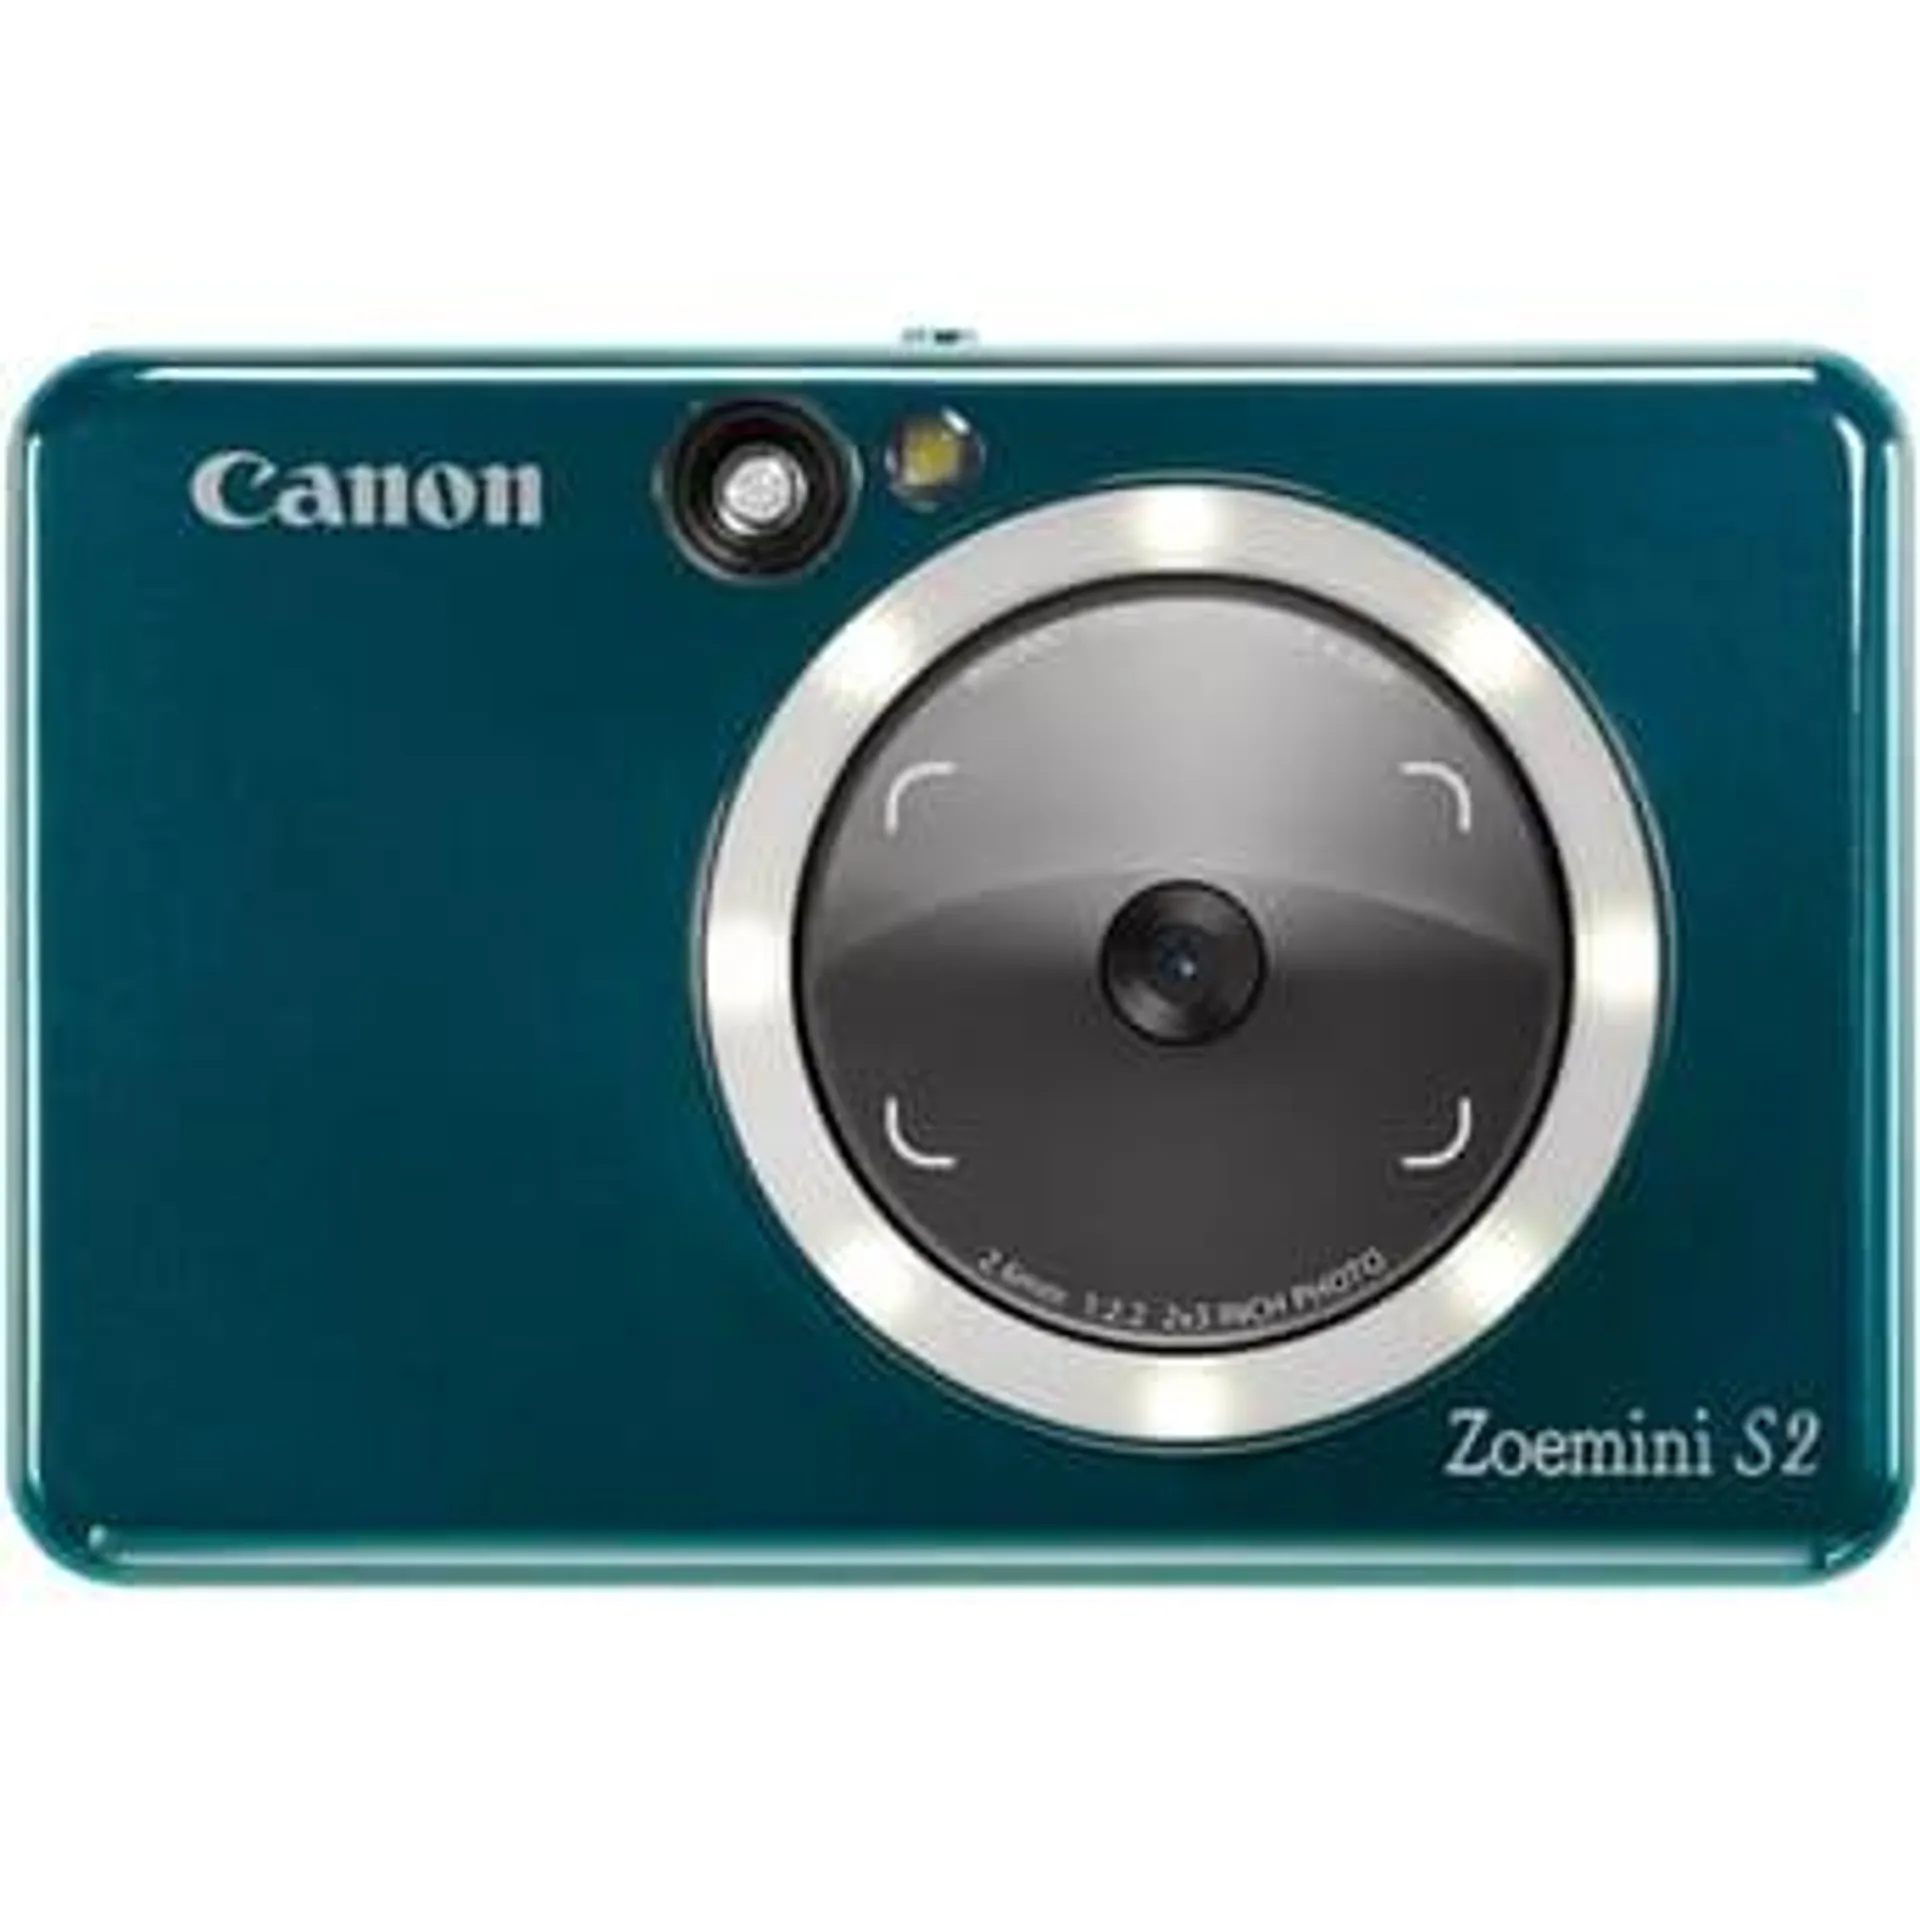 Canon Zoemini S2 Instant Photo Printer (Teal)